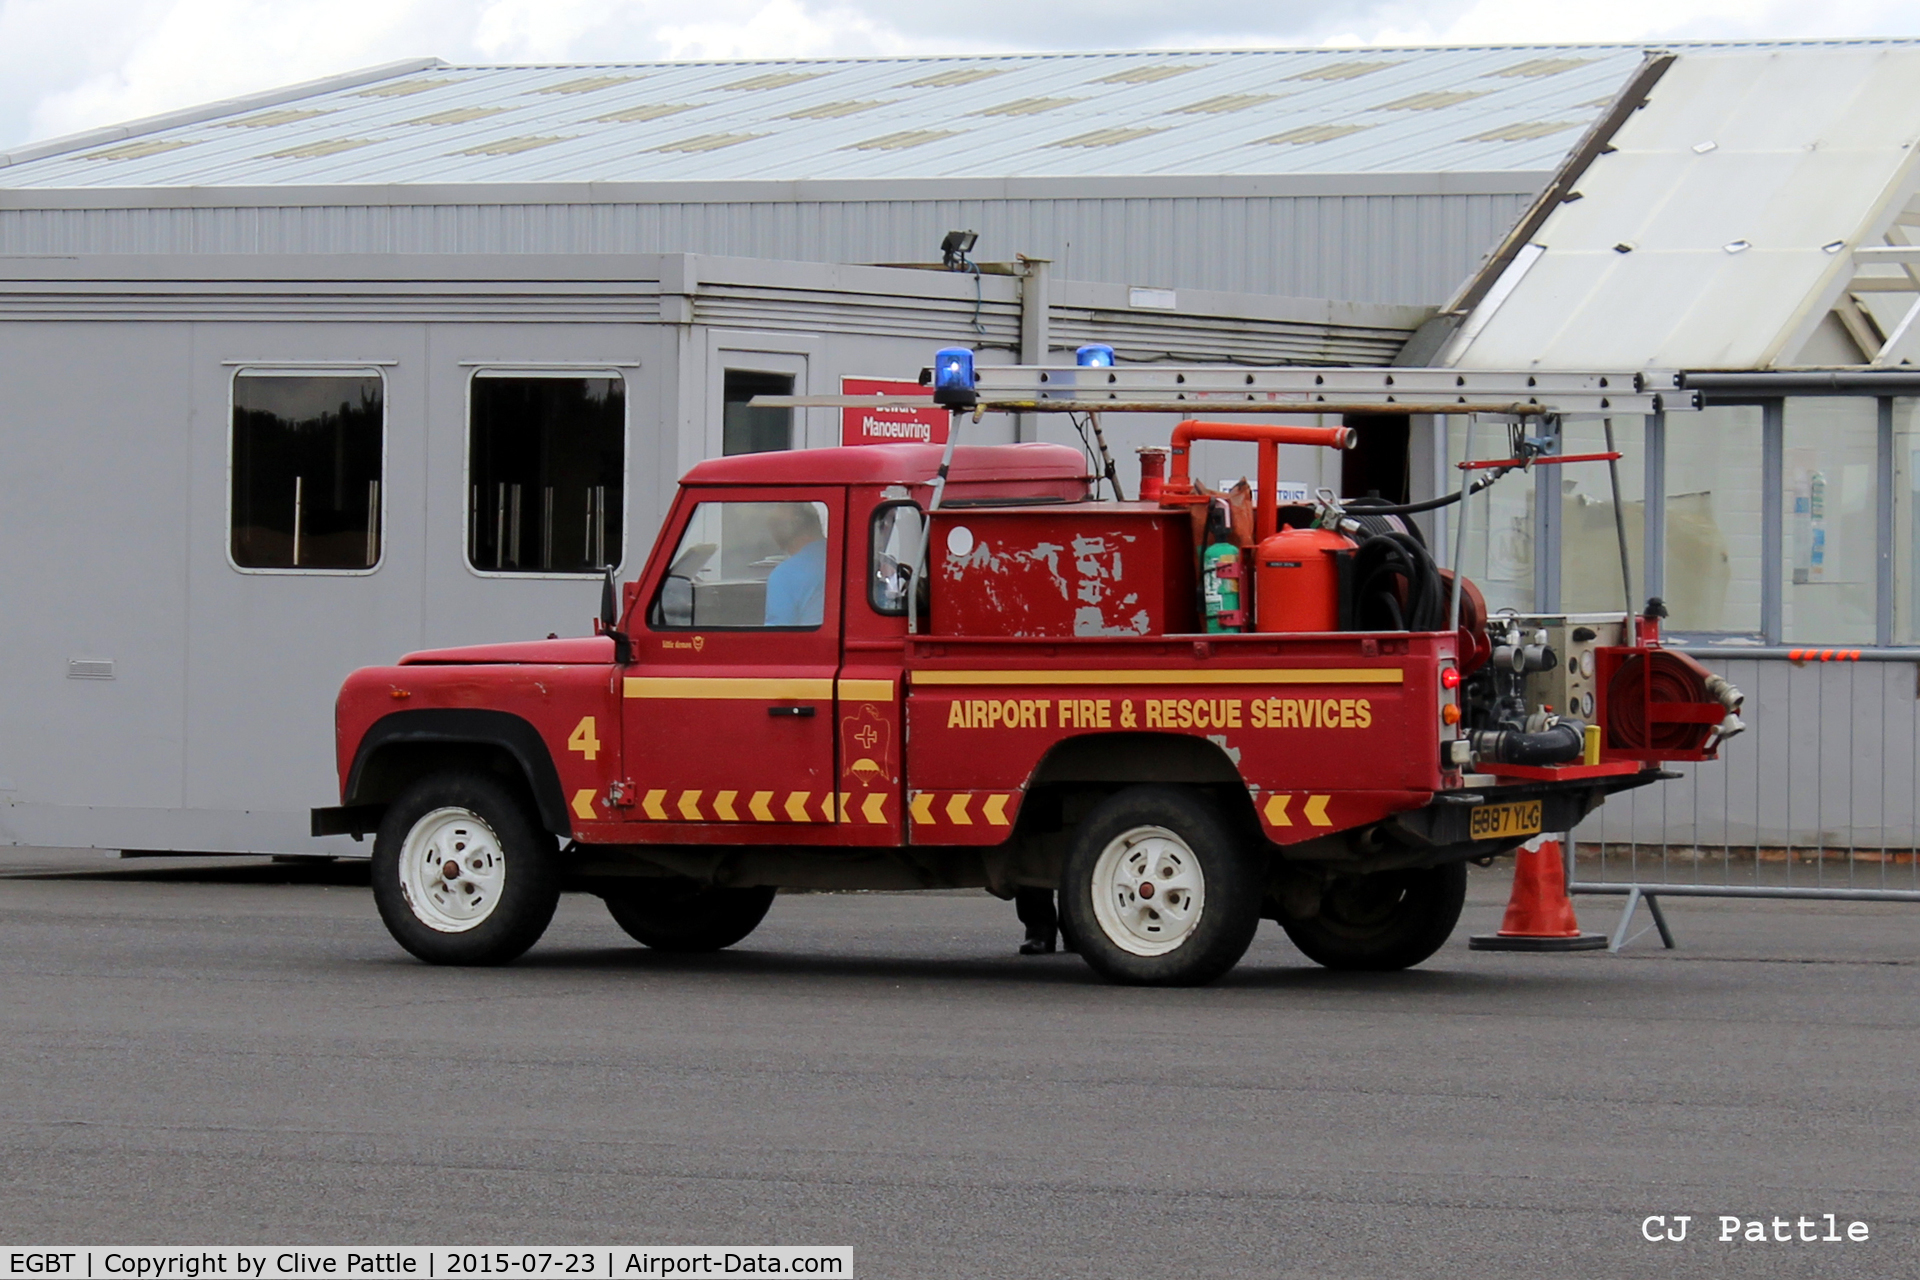 Turweston Aerodrome Airport, Turweston, England United Kingdom (EGBT) - The Fire Rescue vehicle at Turweston EGBT